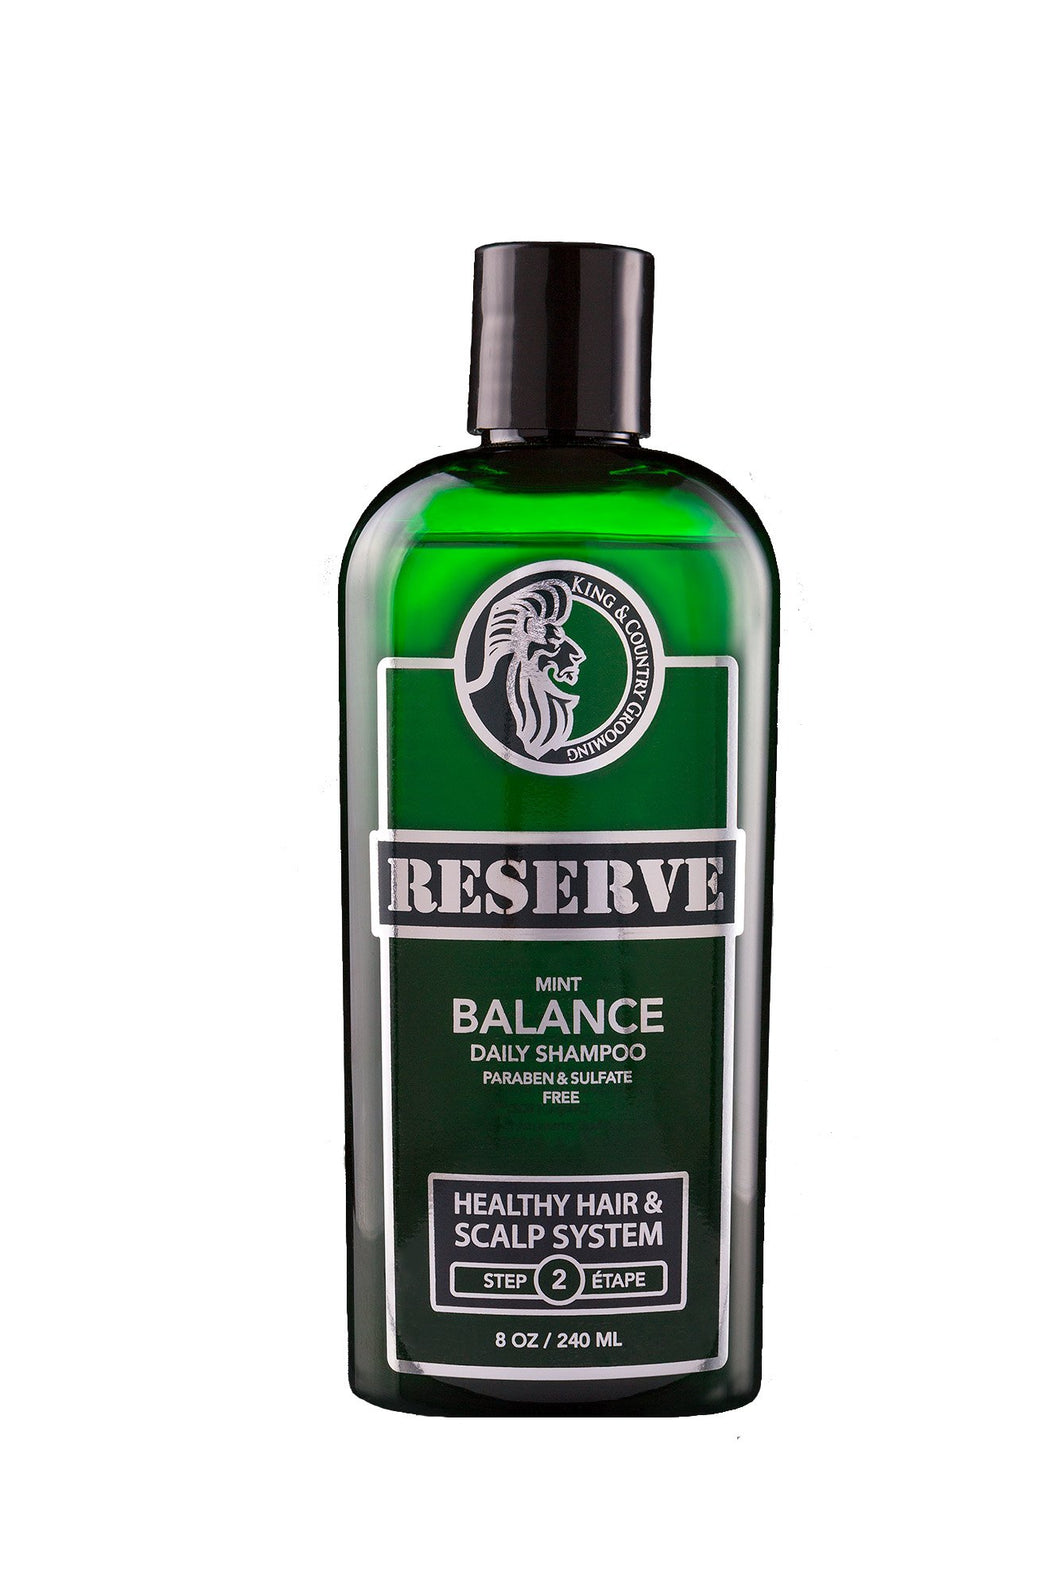 Reserve balance hair shampoo, daily mint scent shampoo